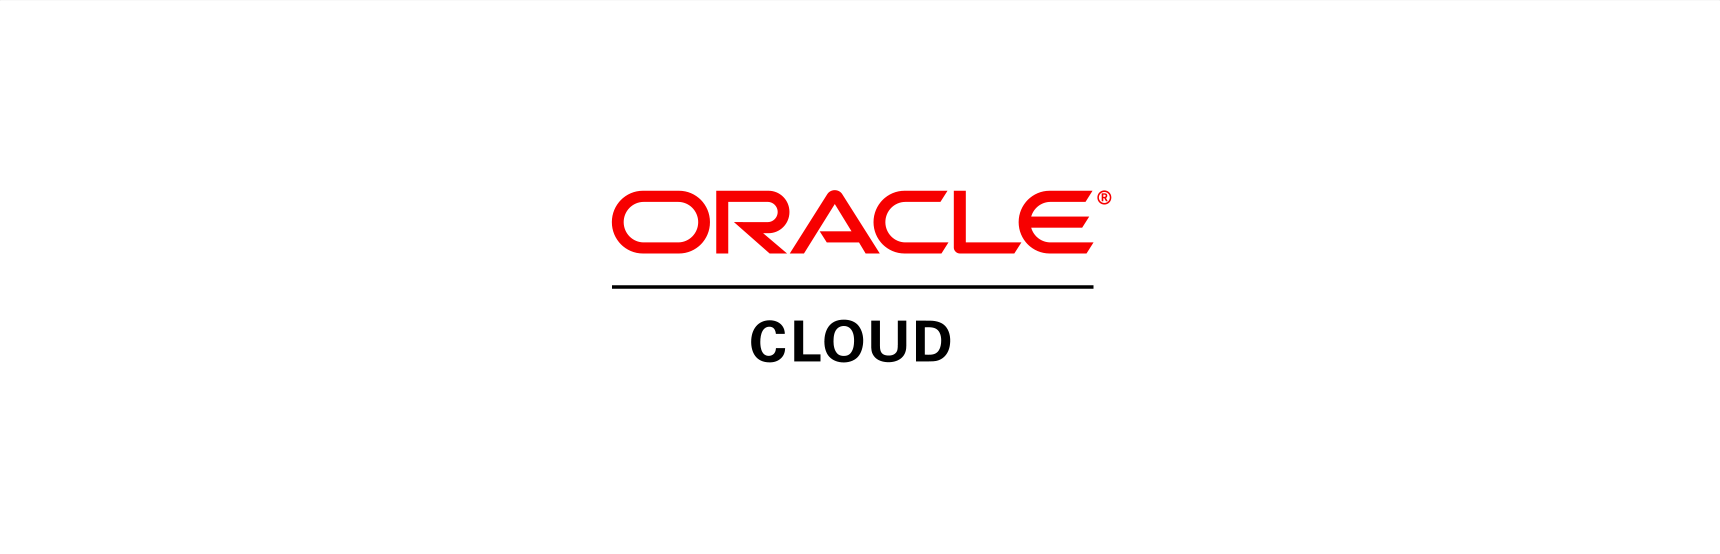 Oracle EBS Logo - TAISTech, A Mastek Company. Oracle Commerce Cloud